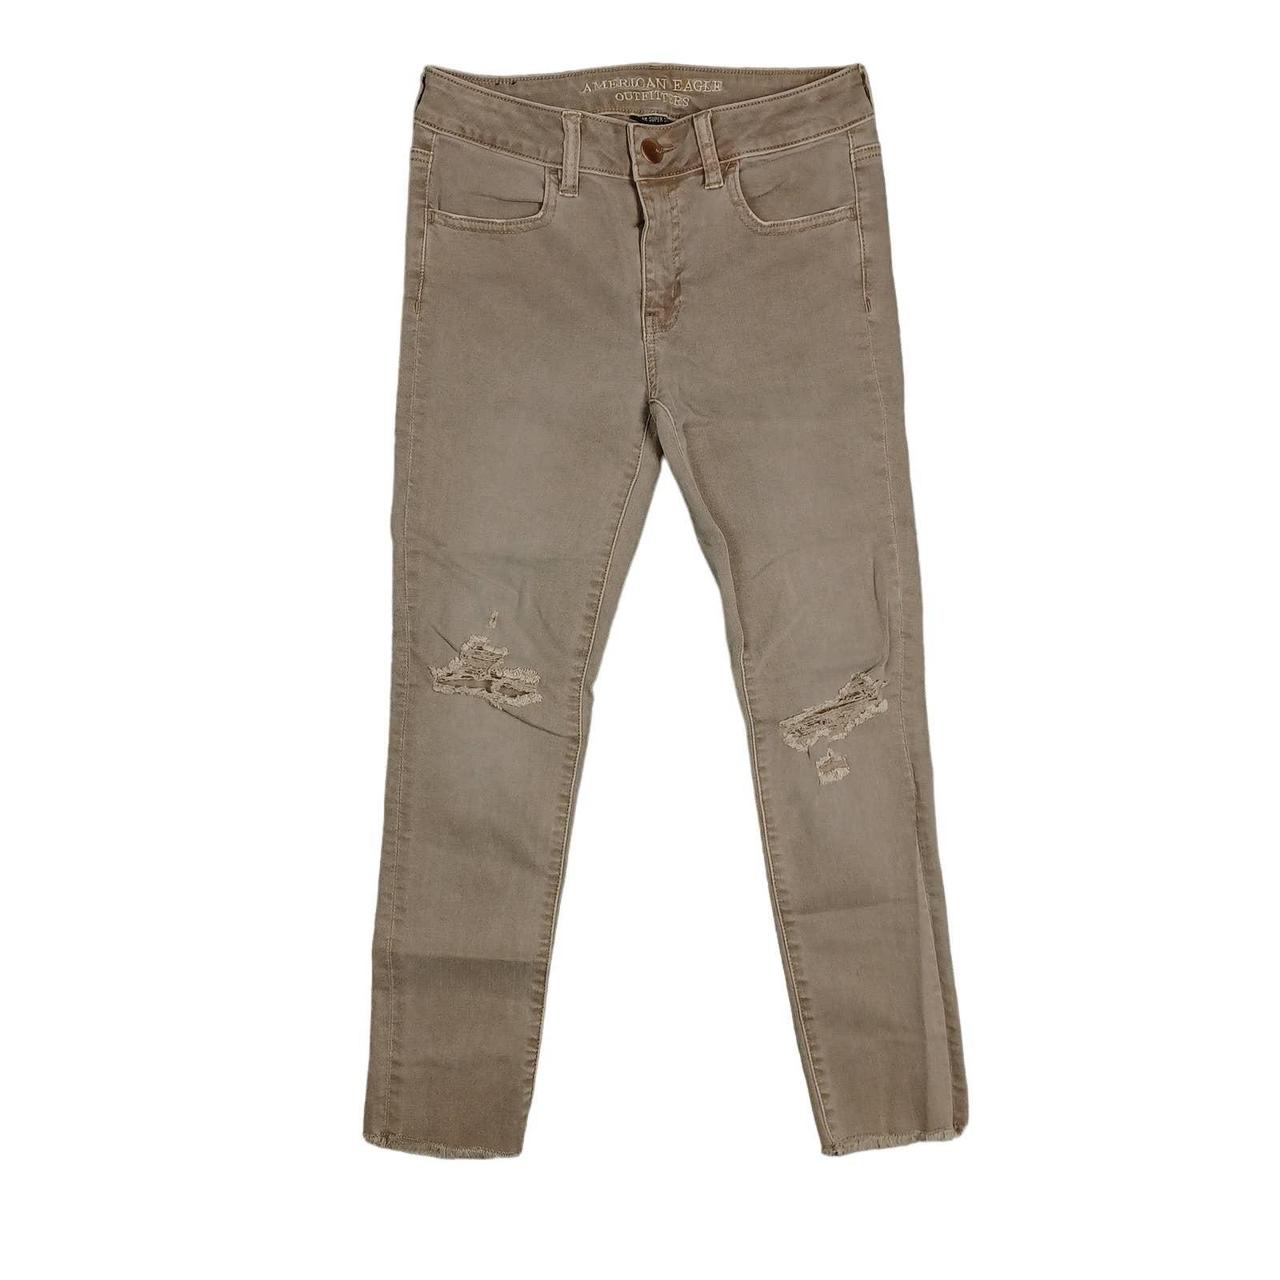 American Eagle Outfitters AE Next Level Flex 32X34 Tan Pants Original  Straight | eBay